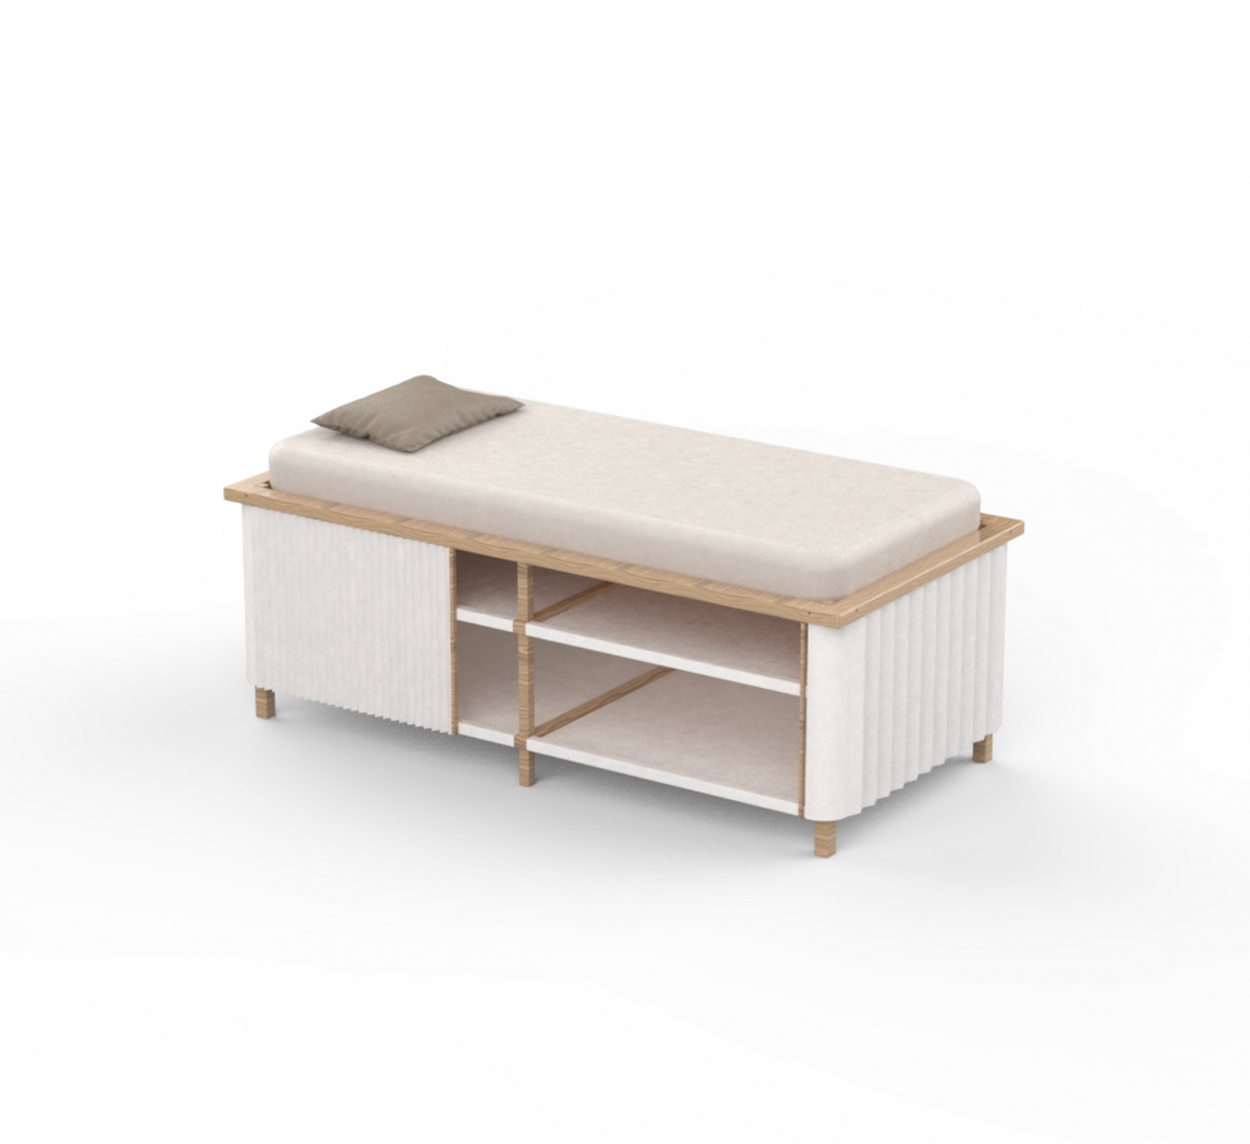 tiny-home-yesul-jang-ecal-graduates-furniture-design_dezeen_2364_col_4